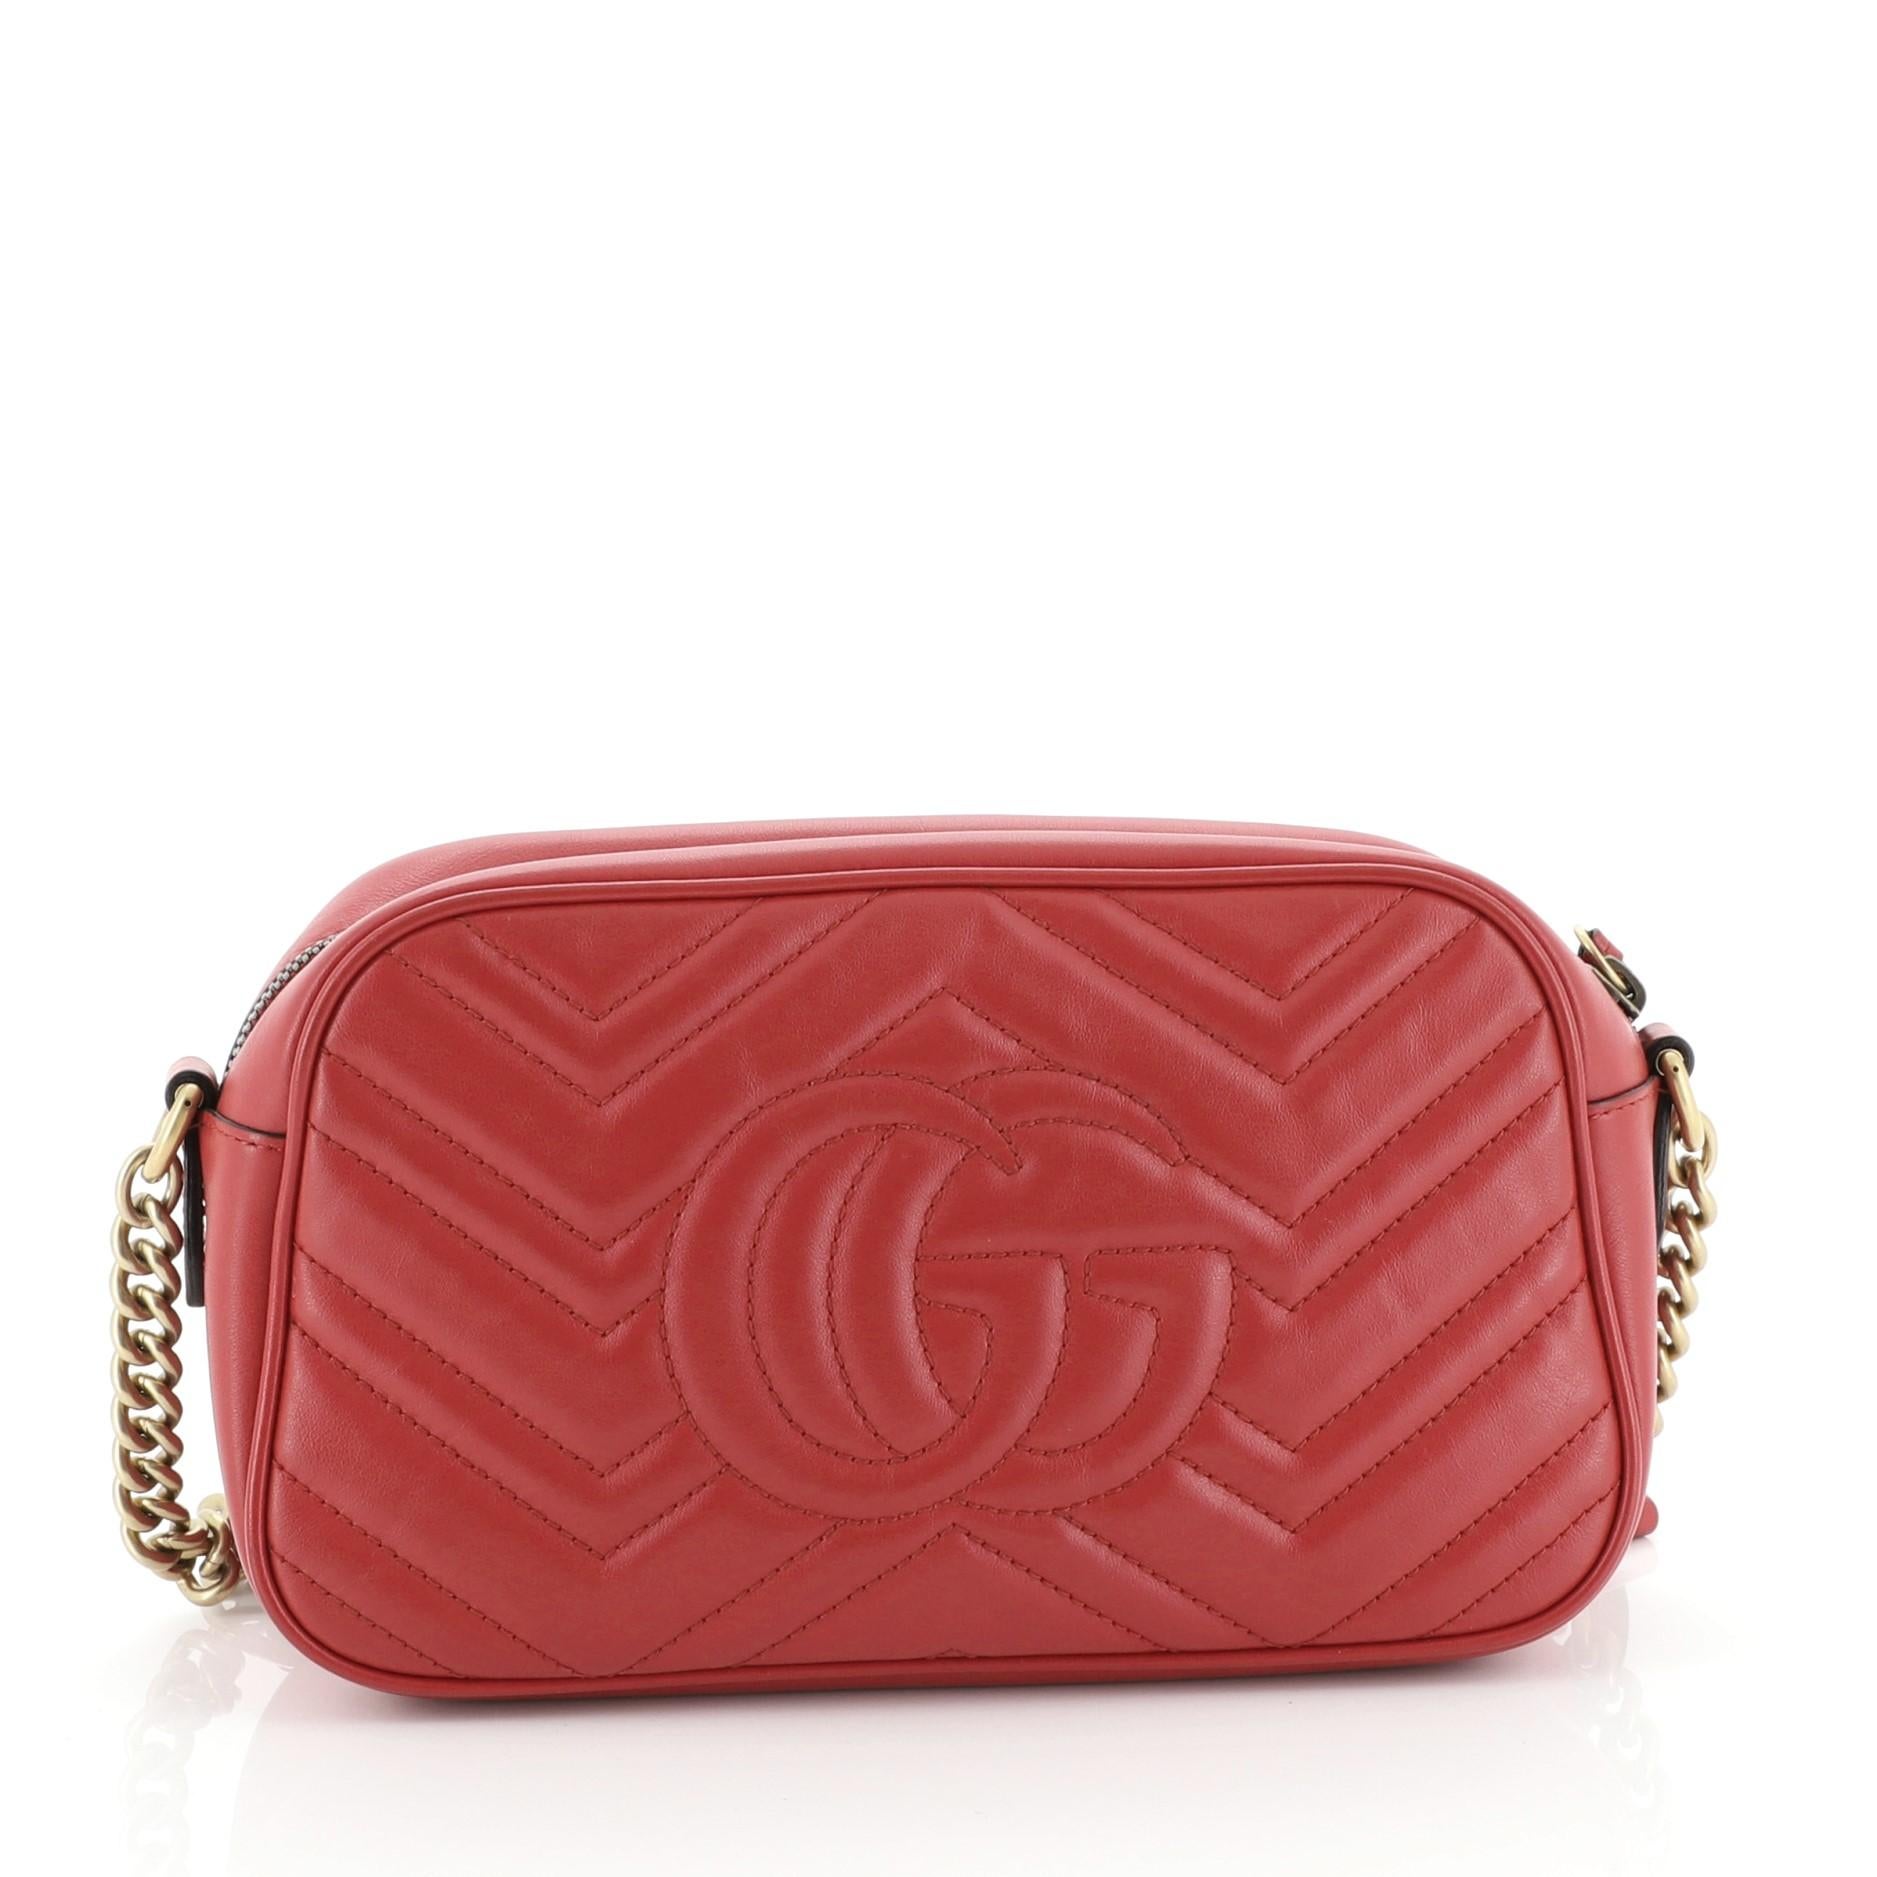 Red Gucci GG Marmont Shoulder Bag